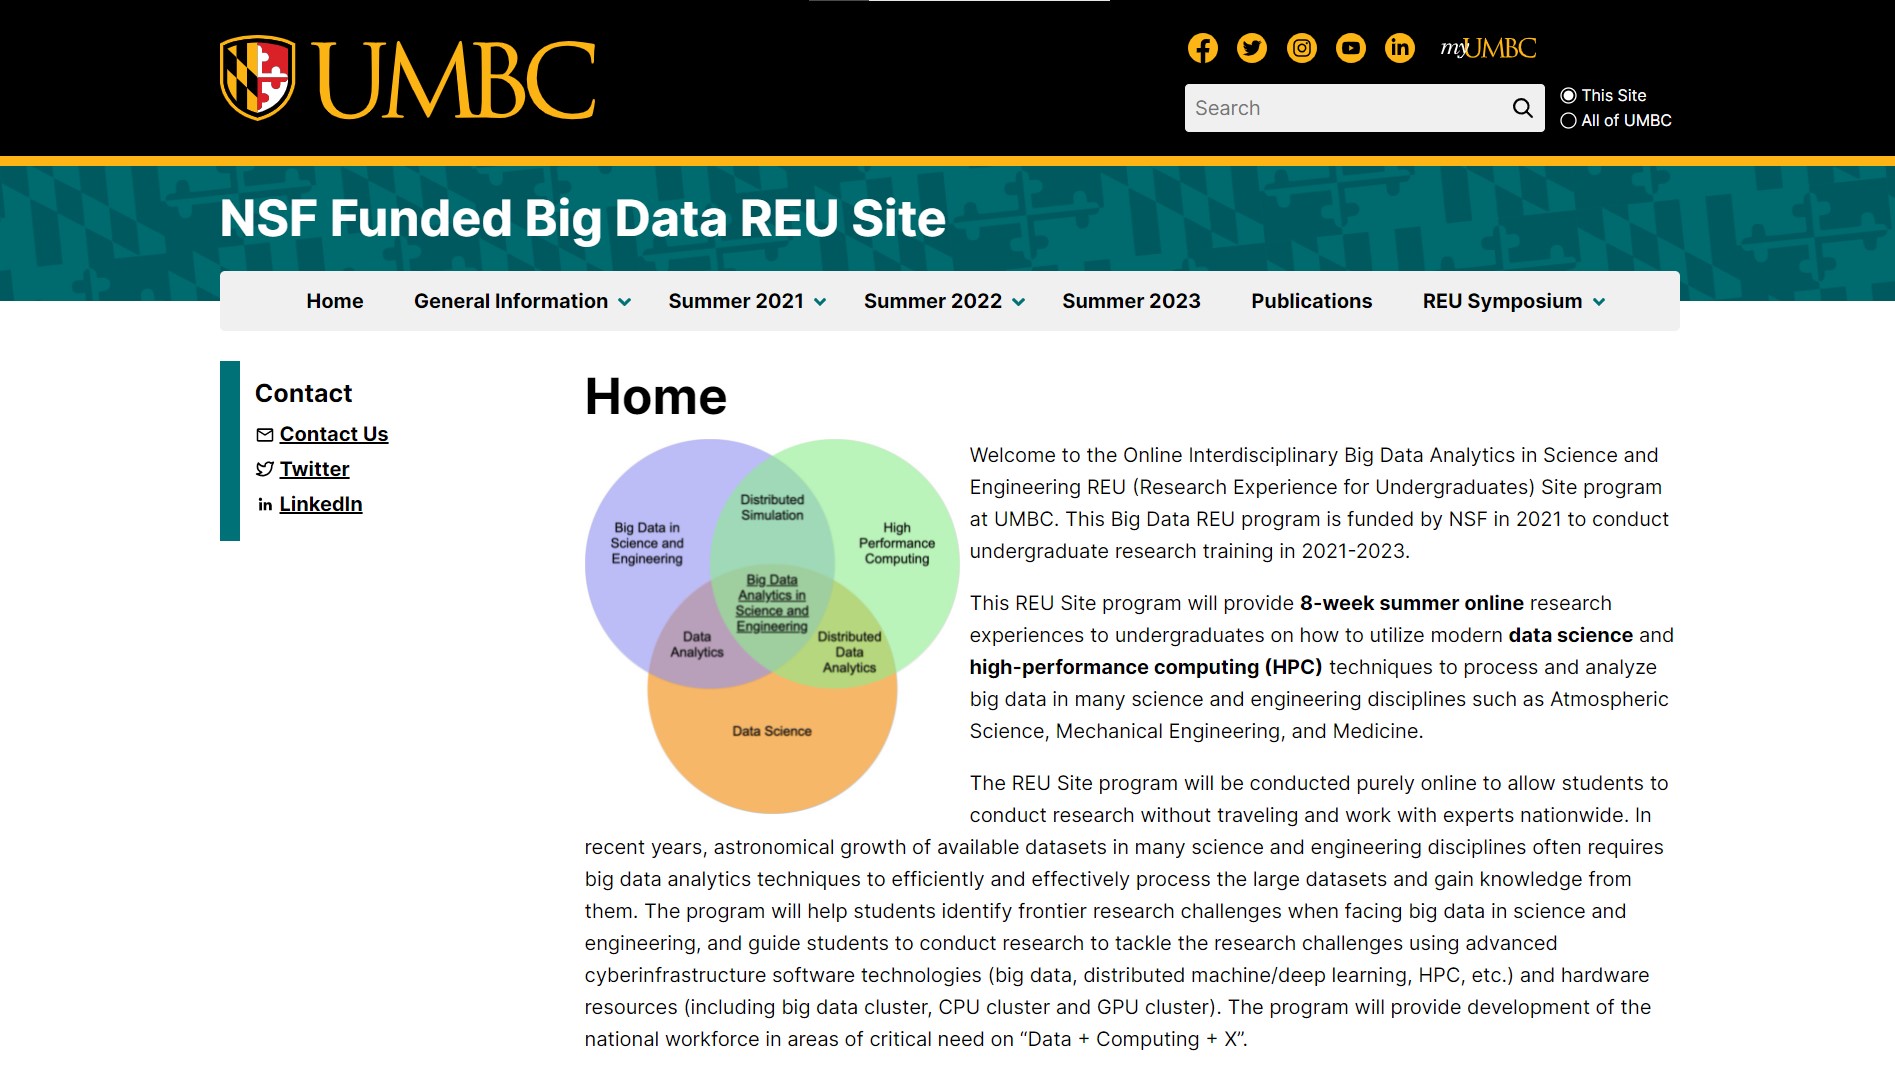 Online Interdisciplinary Big Data Analytics in Science and Engineering